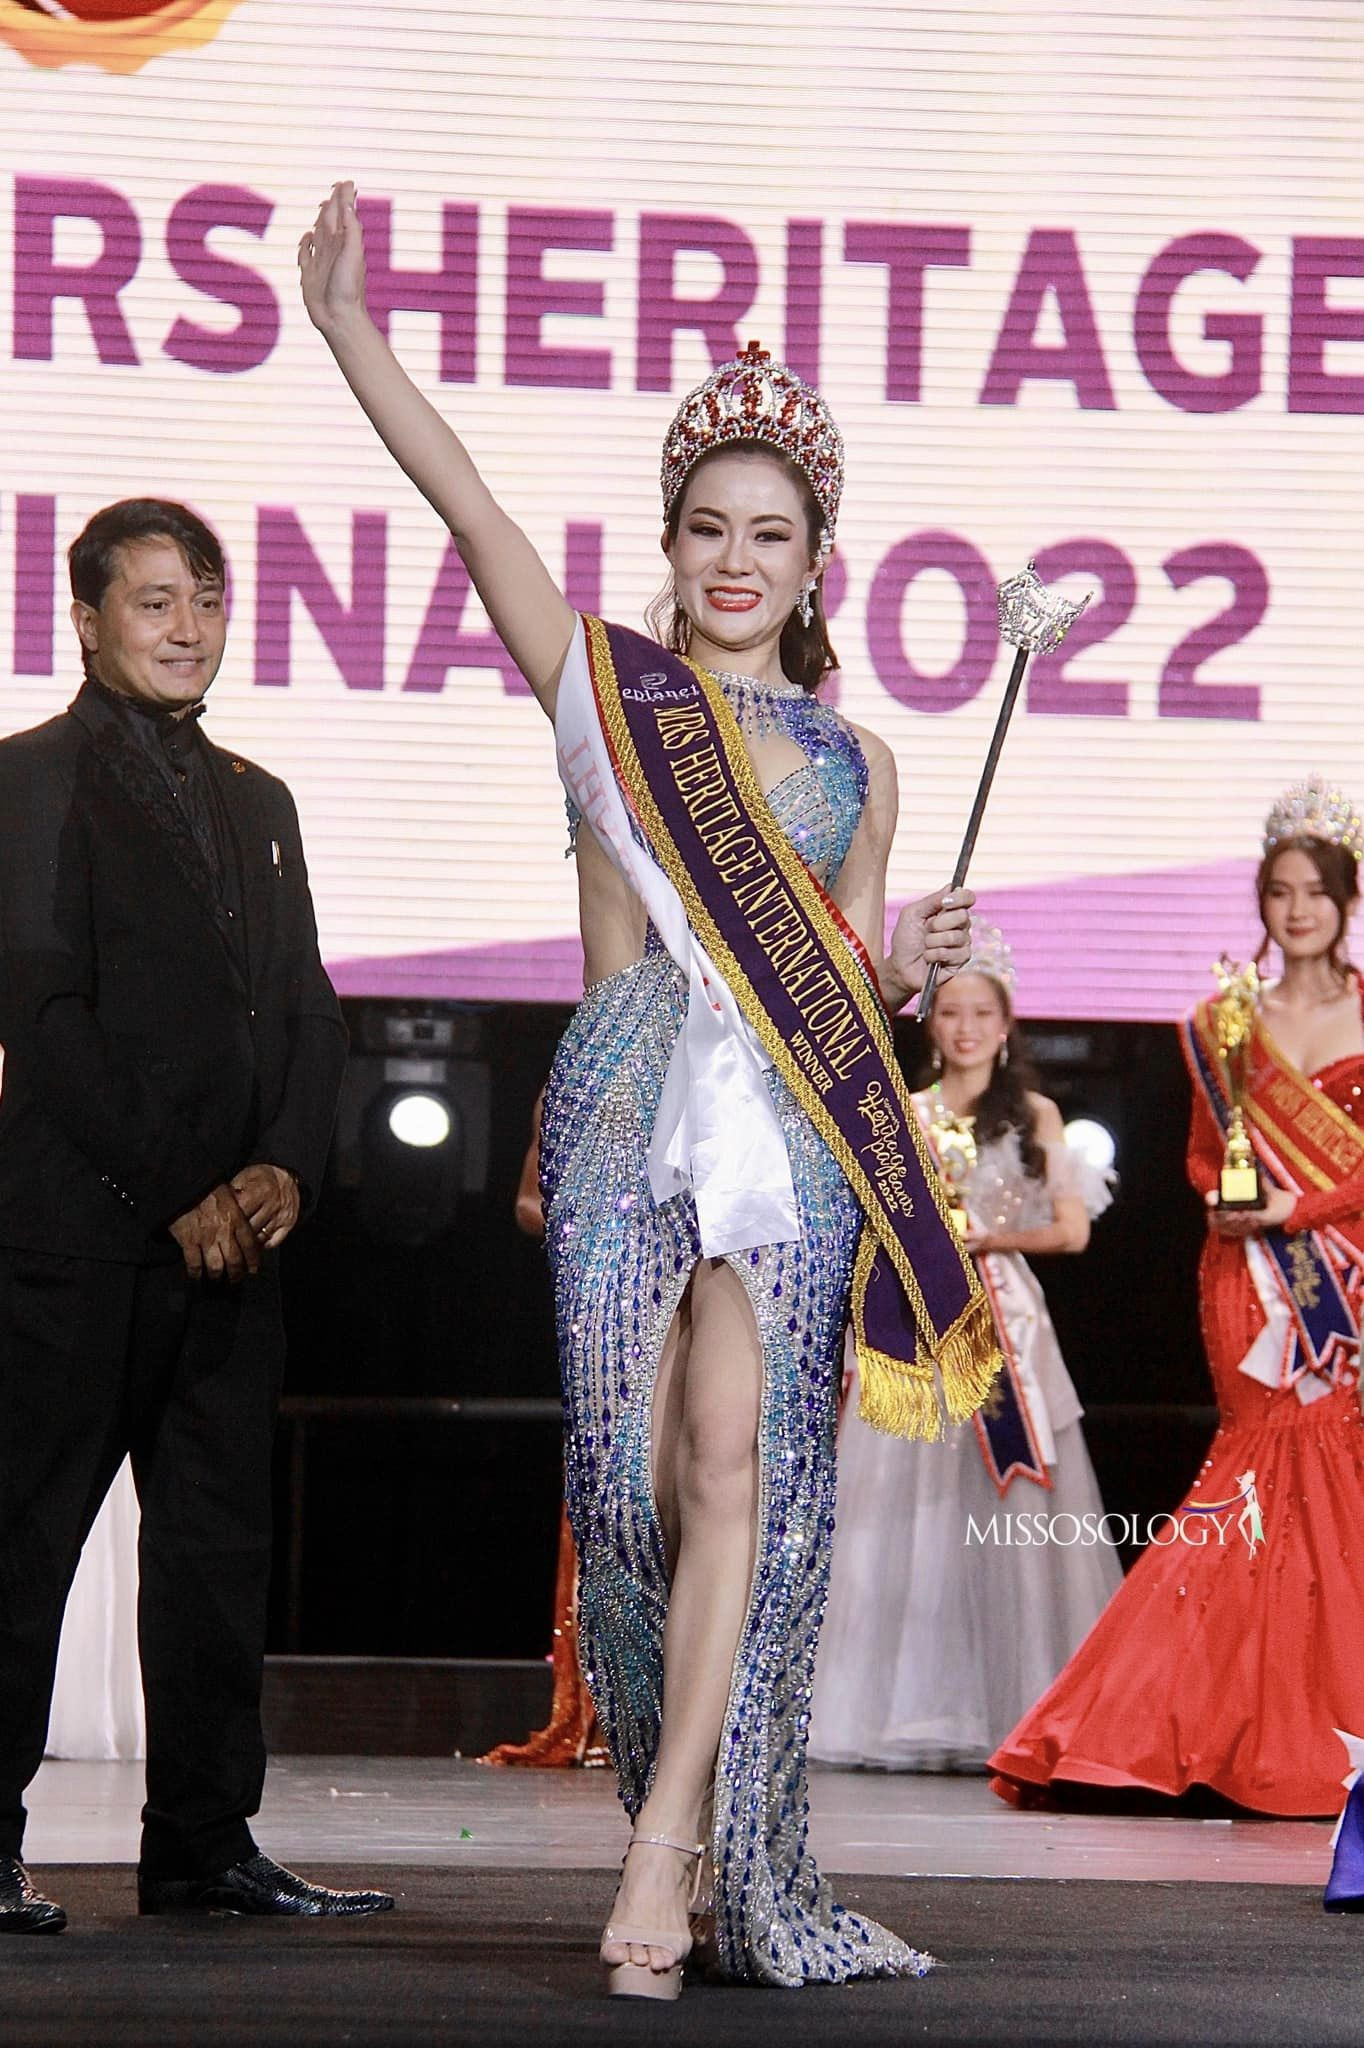 mrs thailand vence mrs heritage international 2022. - Página 2 HH2Lq2n